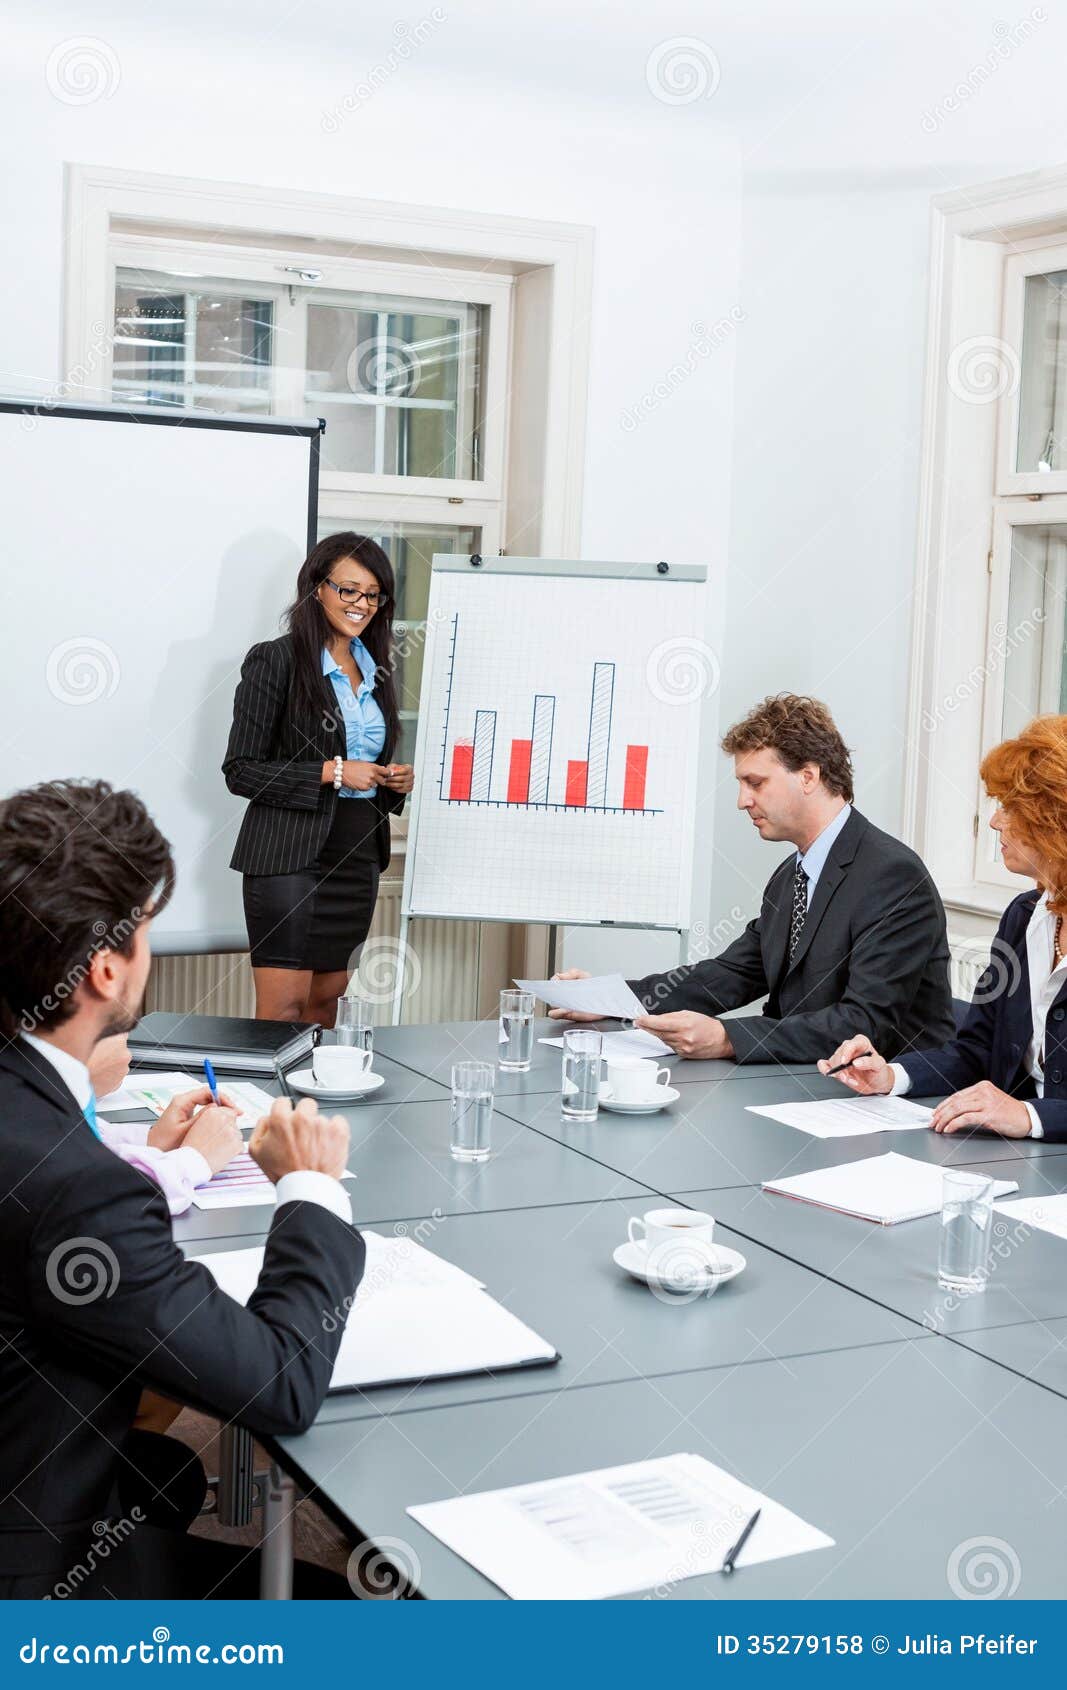 meeting presentation stock photo